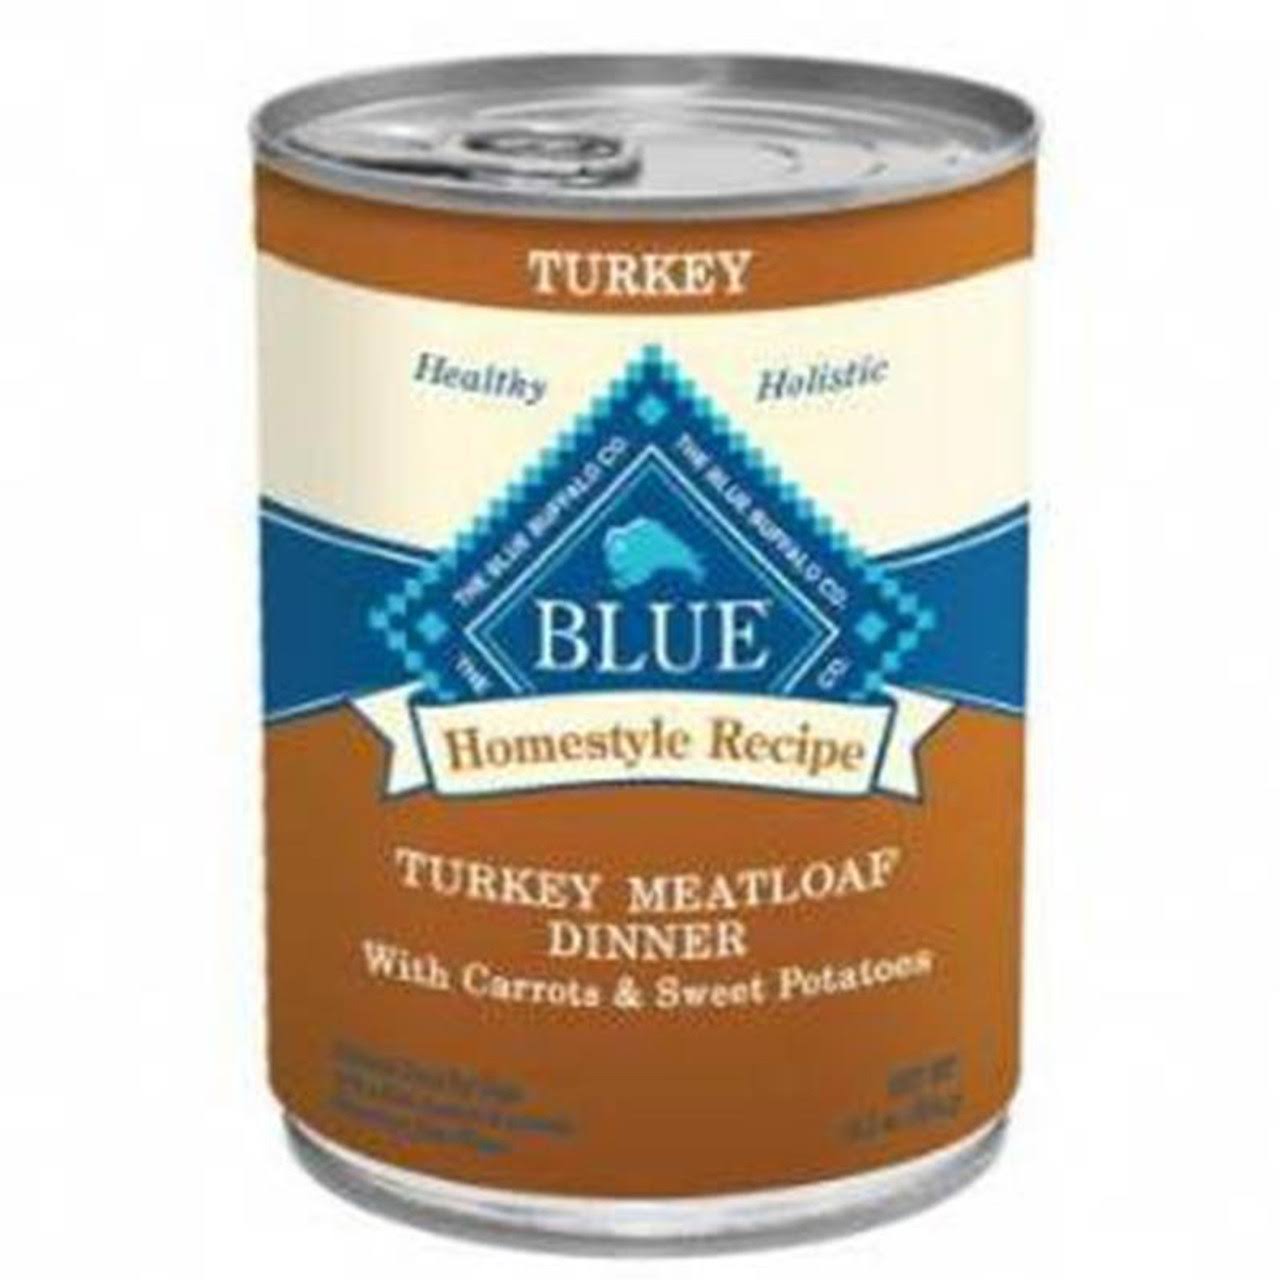 Blue Buffalo Homestyle Recipe Canned Dog Food - Turkey Meatloaf Dinner